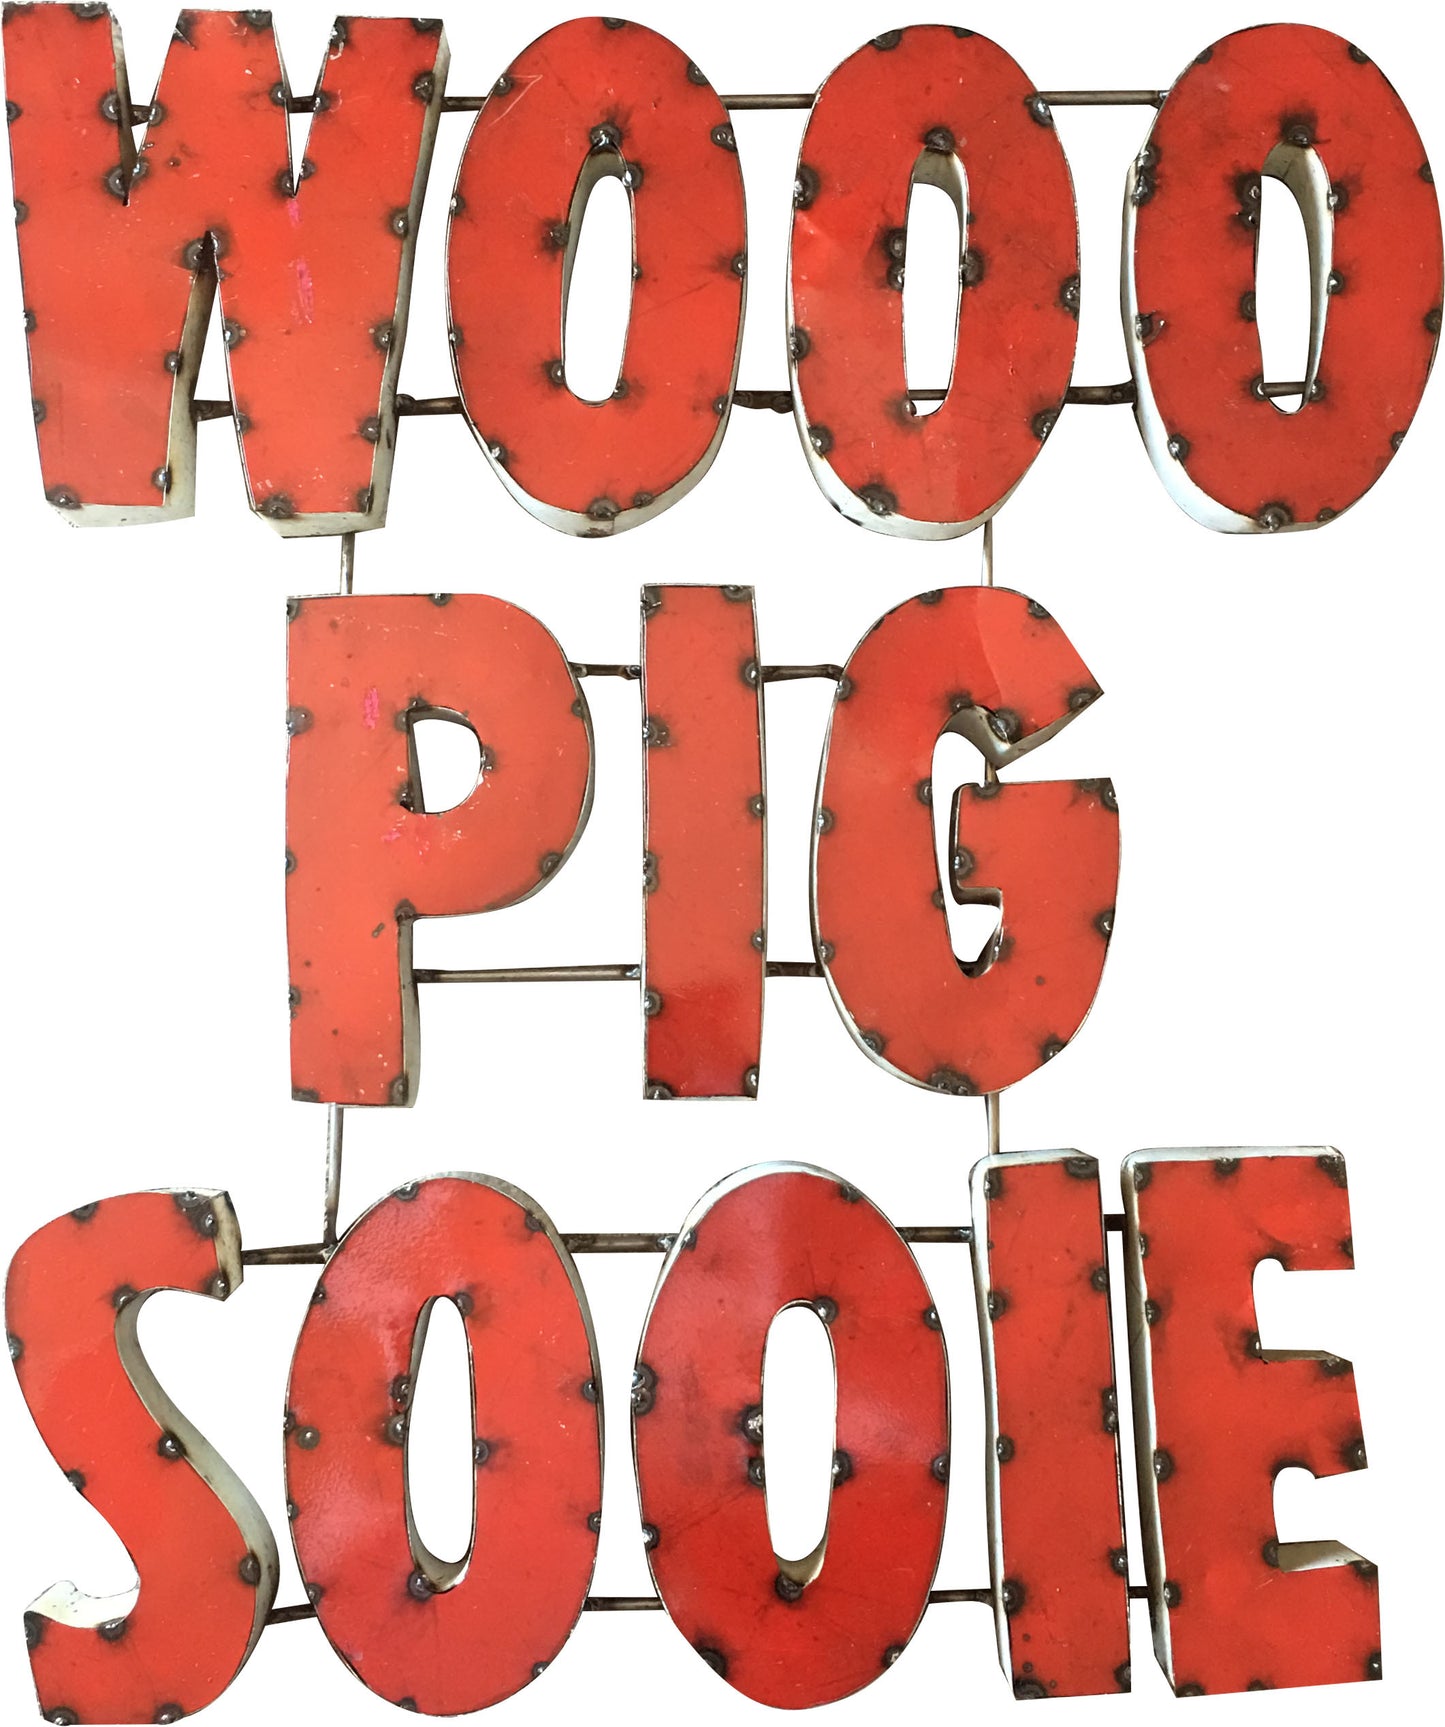 University of Arkansas "Wooo Pig Sooie" Recycled Metal Wall Decor